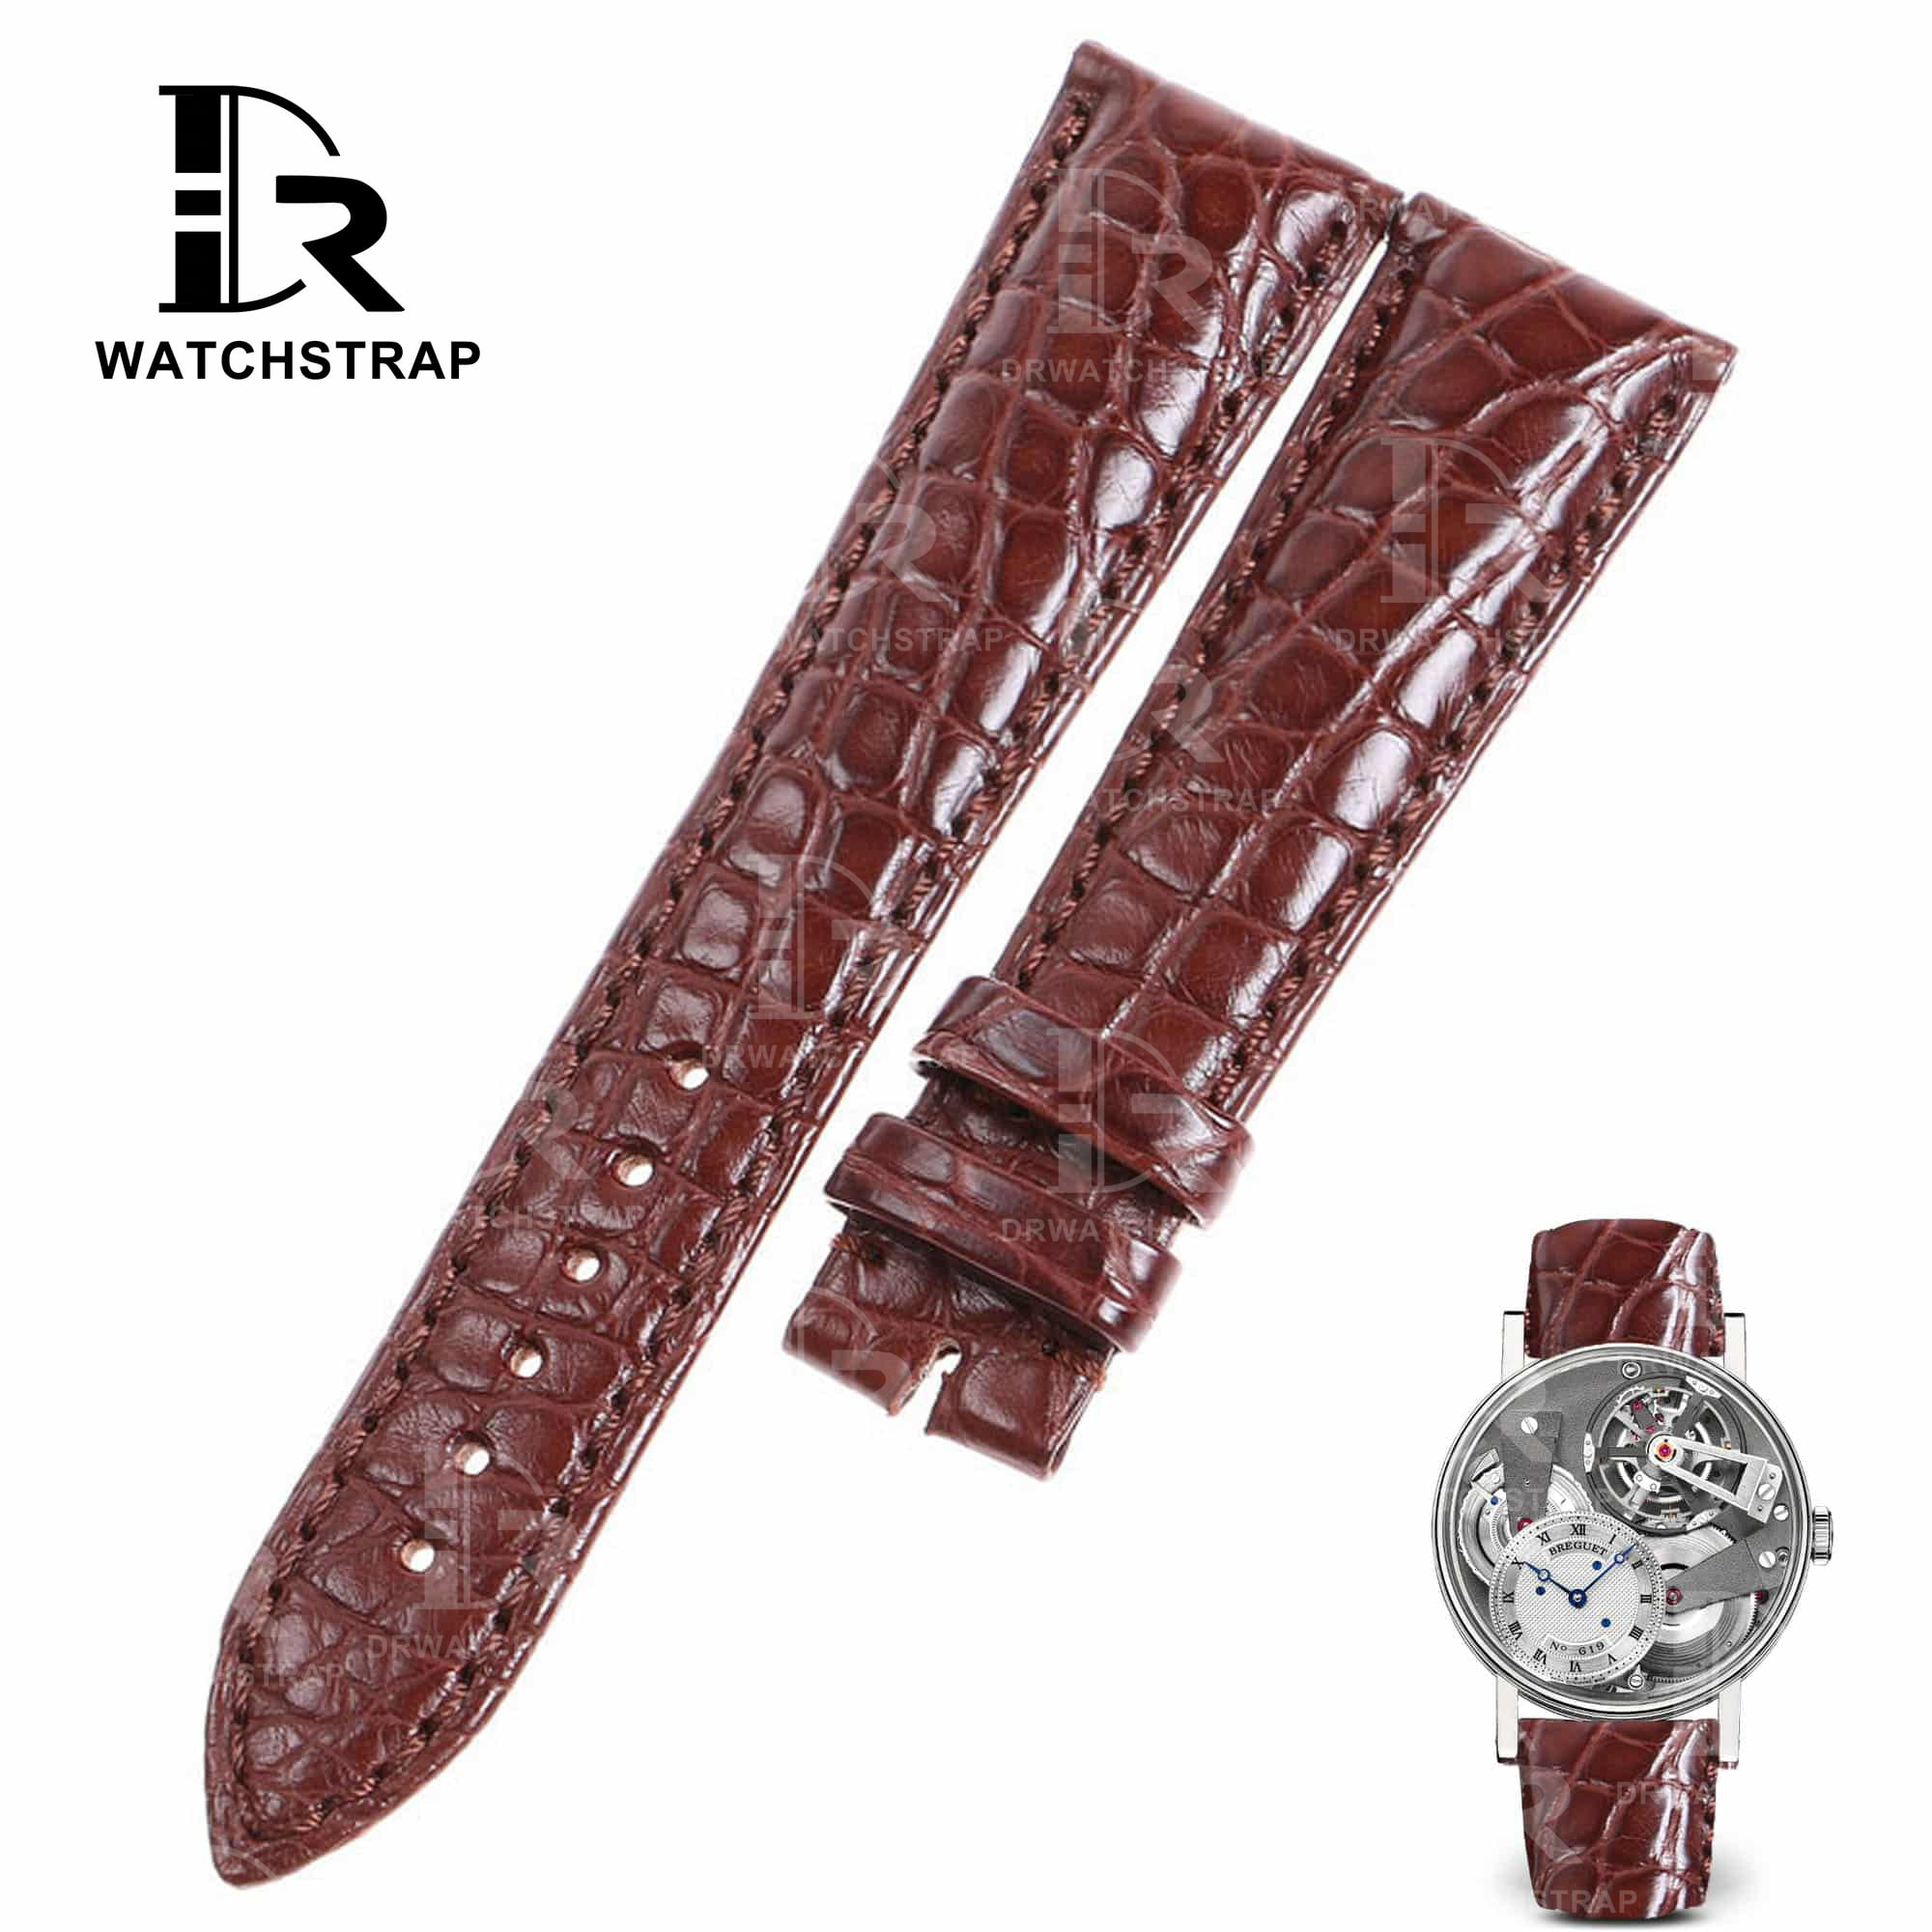 Buy custom handmade brown Breguet leather watch strap